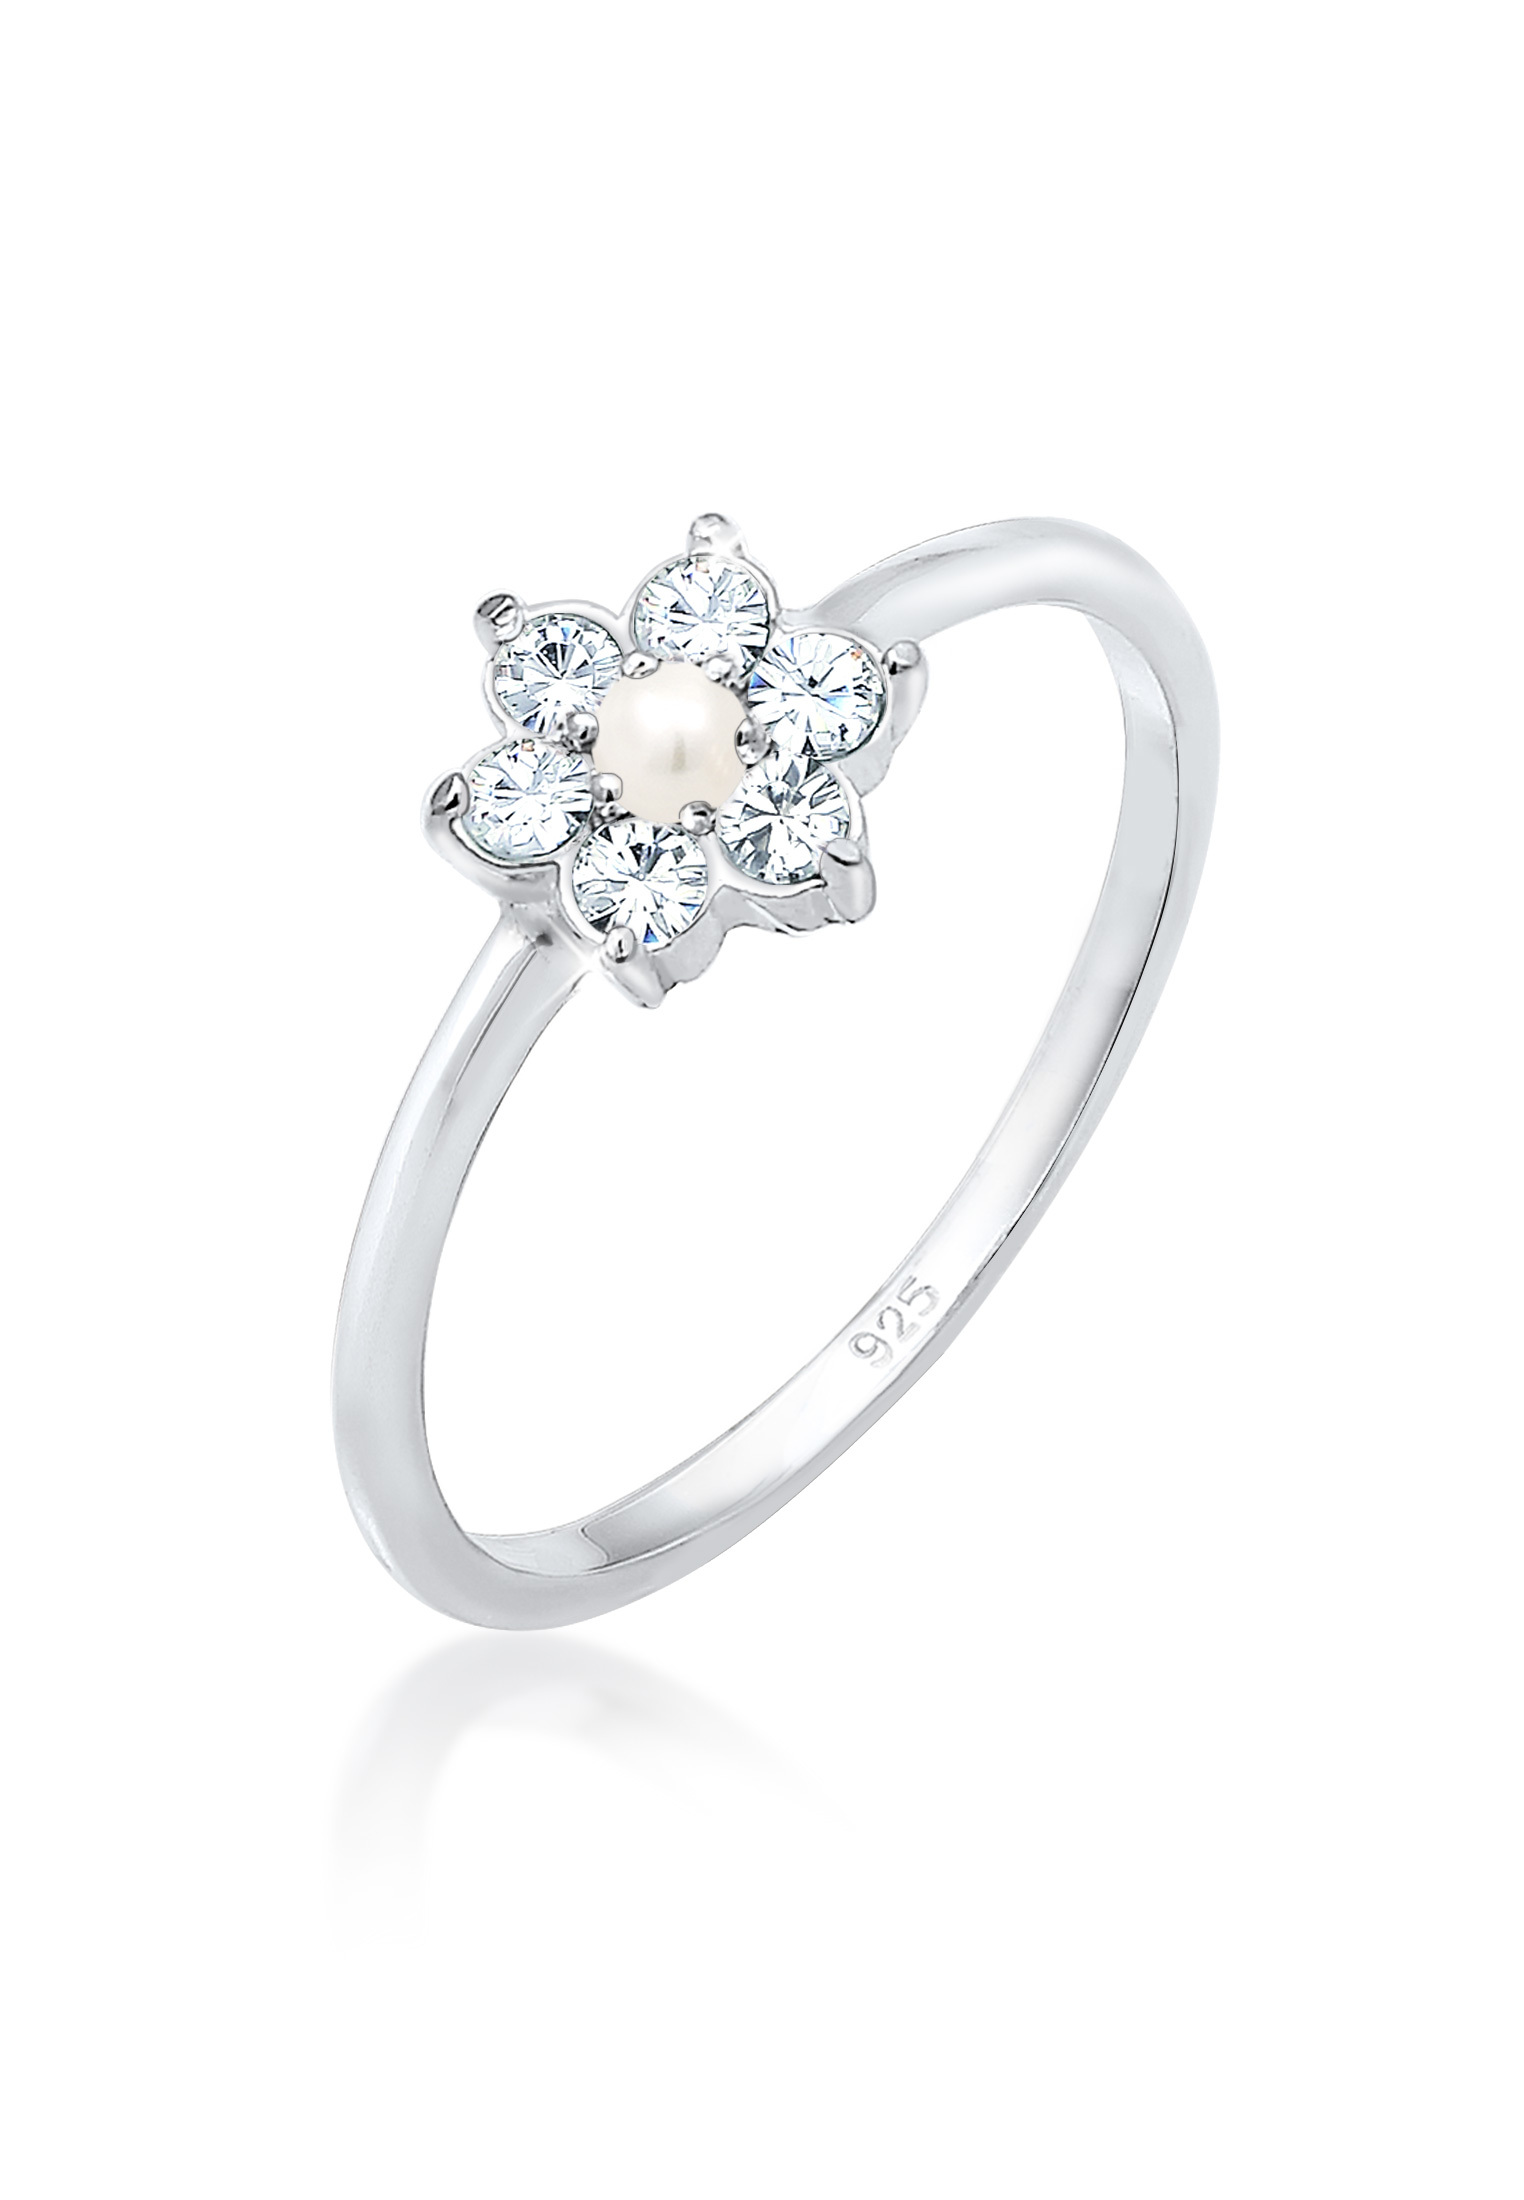 Verlobungsring Blume | Perle, Kristall ( Weiß ) | 925er Sterling Silber